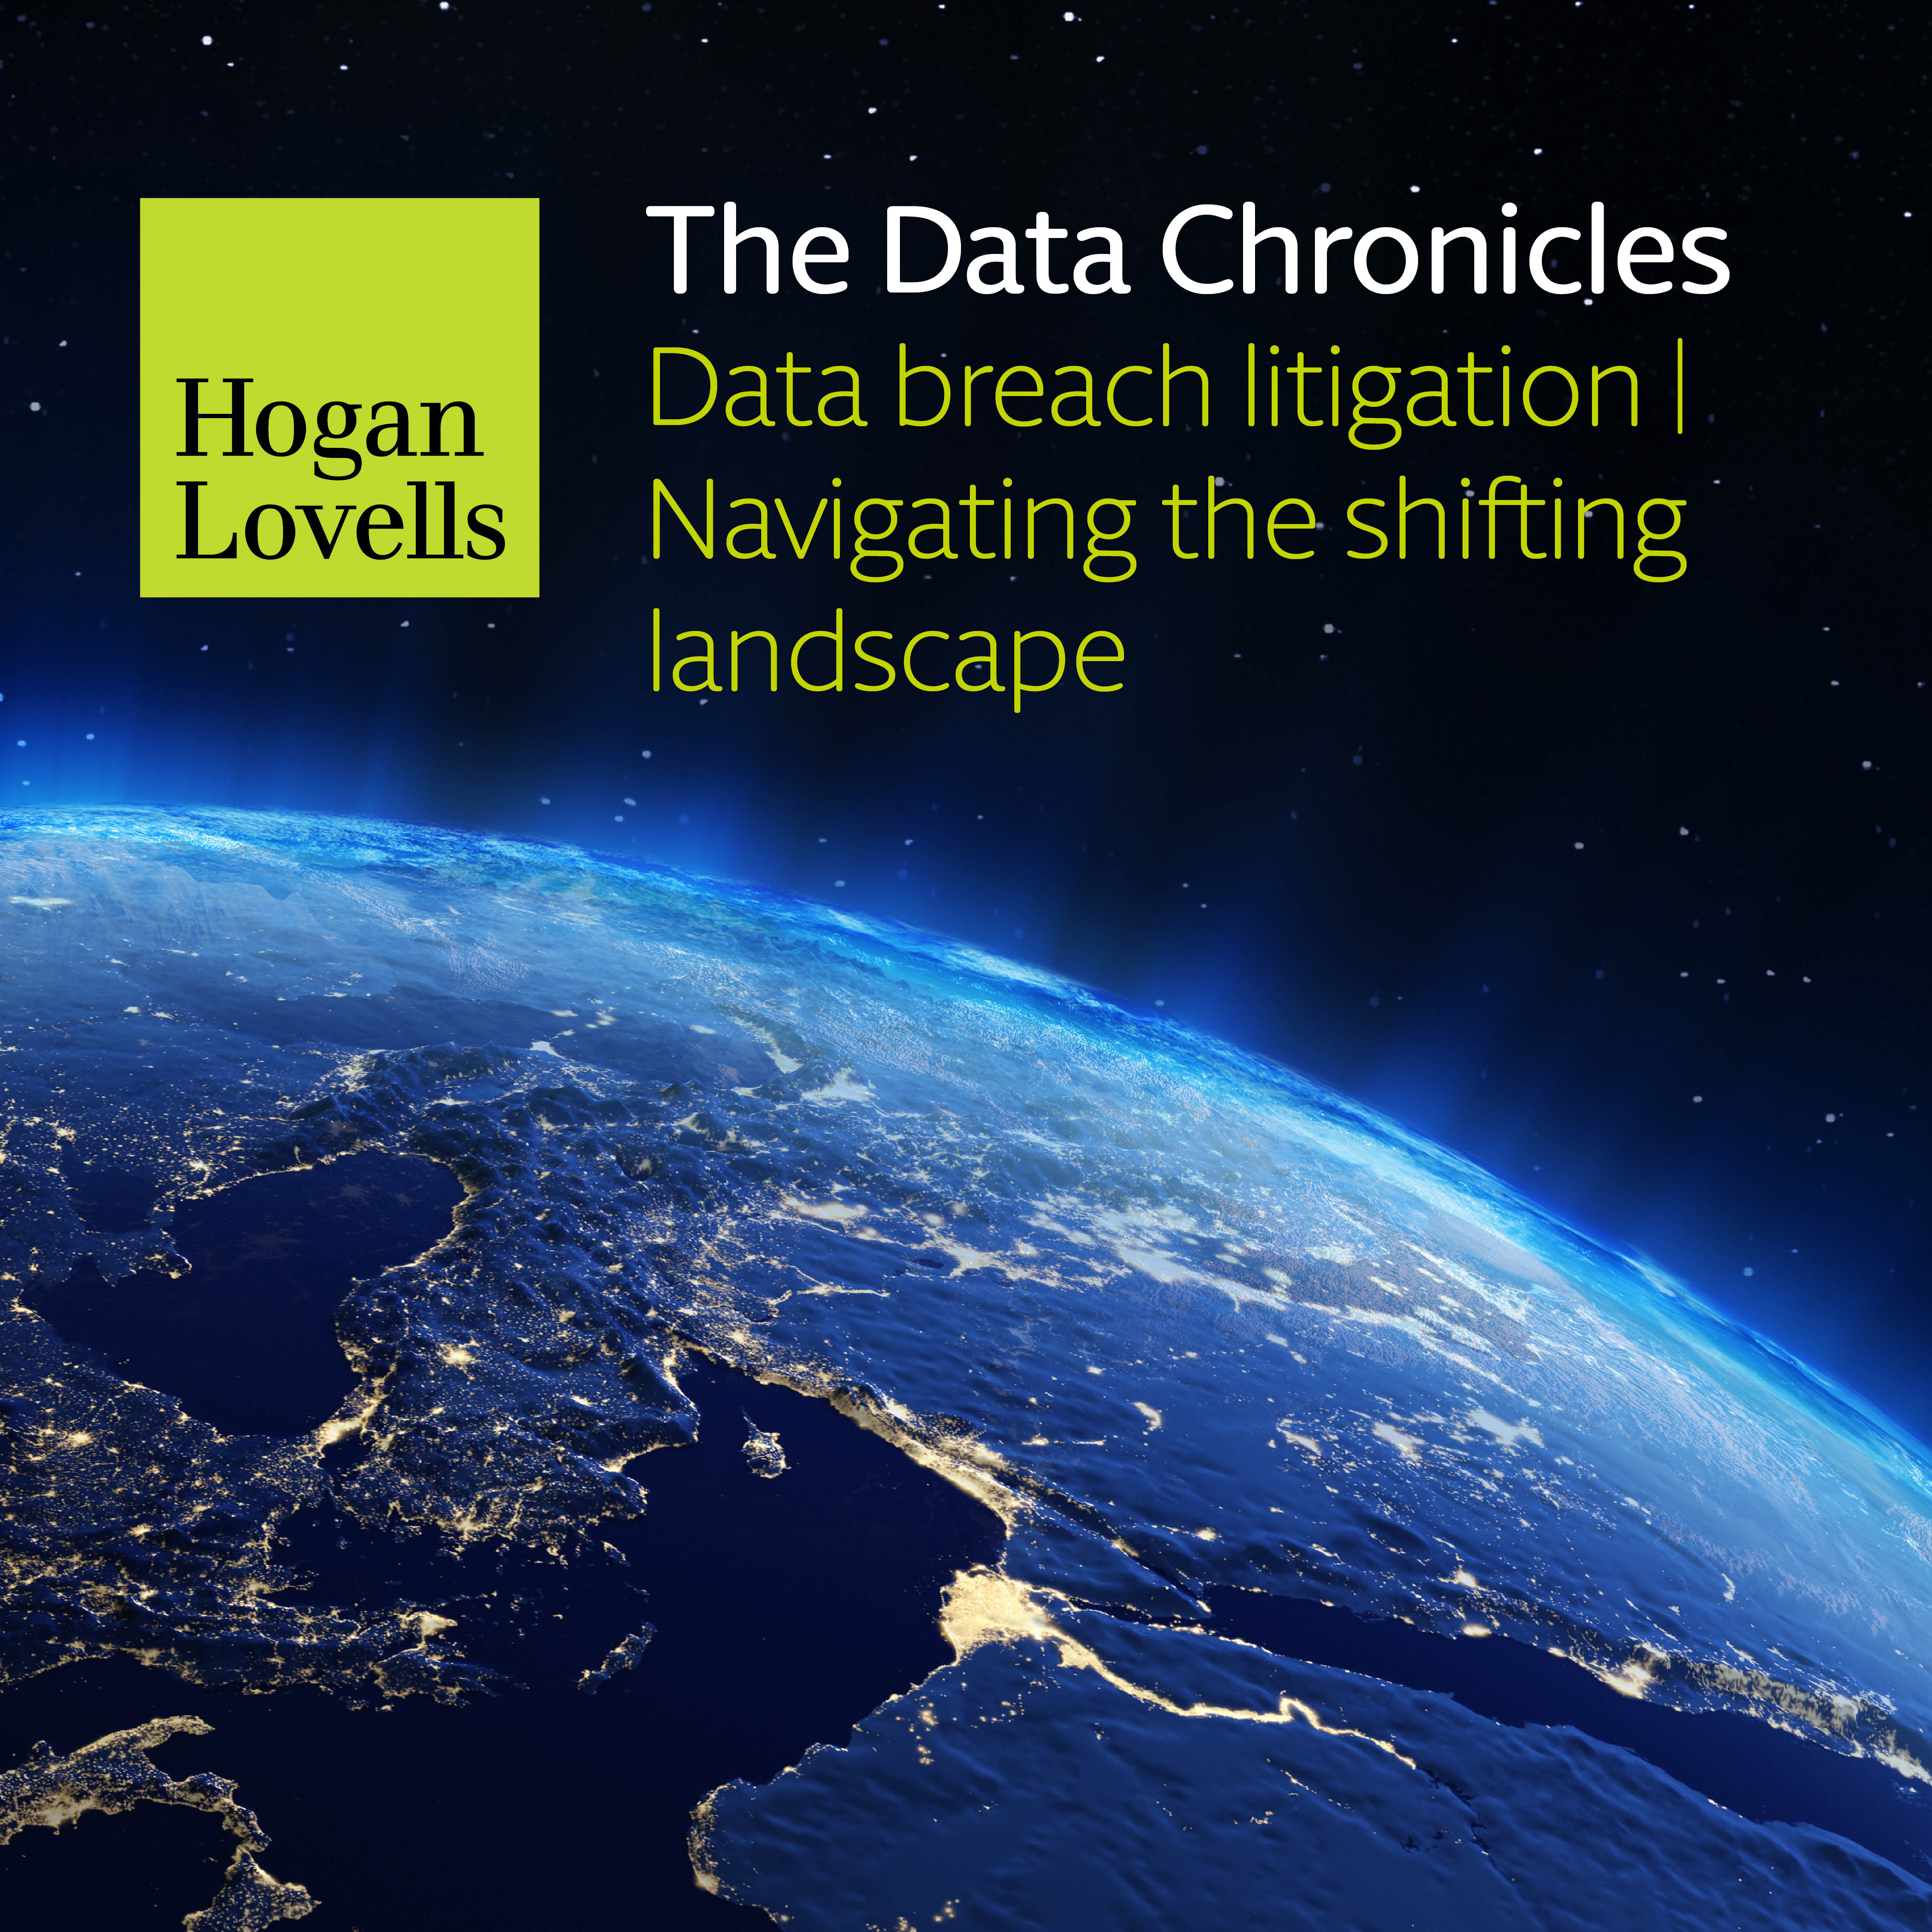 The Data Chronicles_Data breach litigation part 1